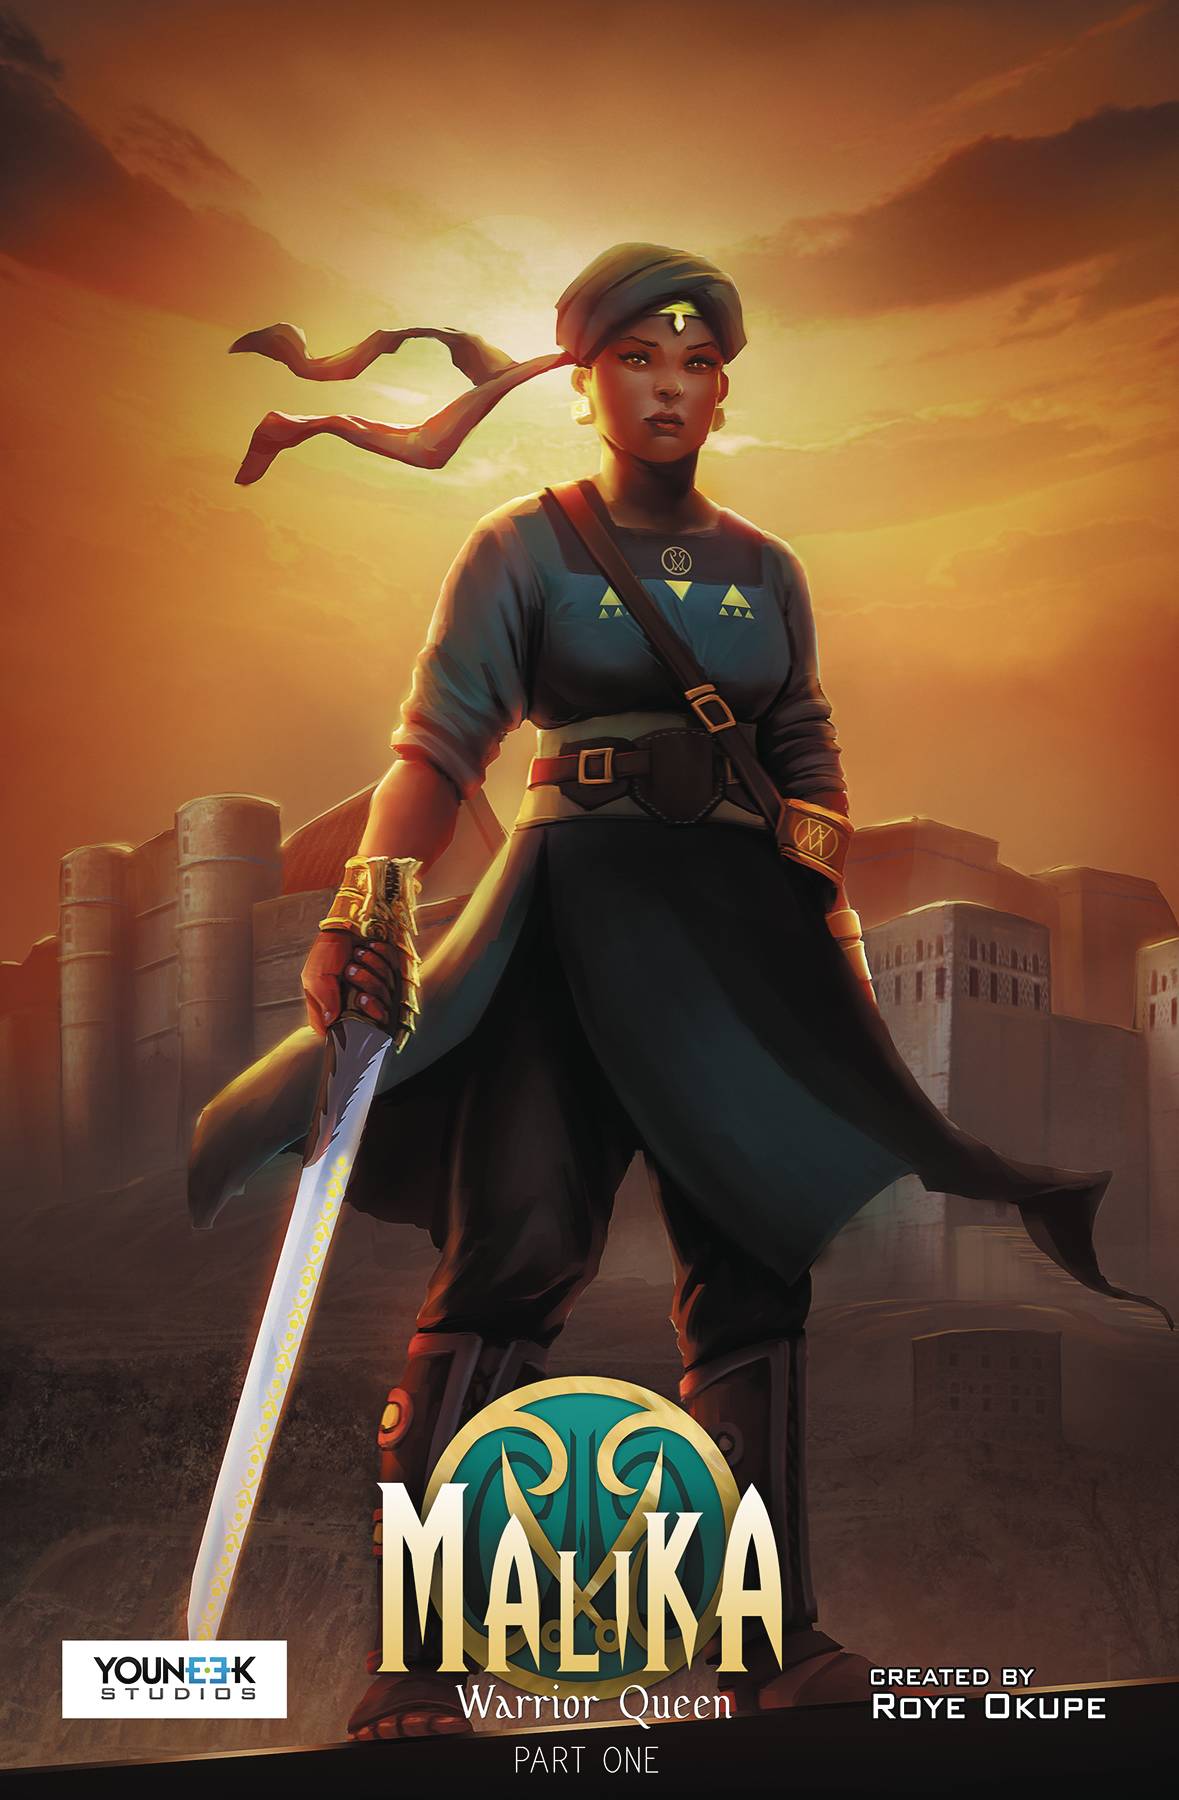 Malika Warrior Queen Graphic Novel Volume 1